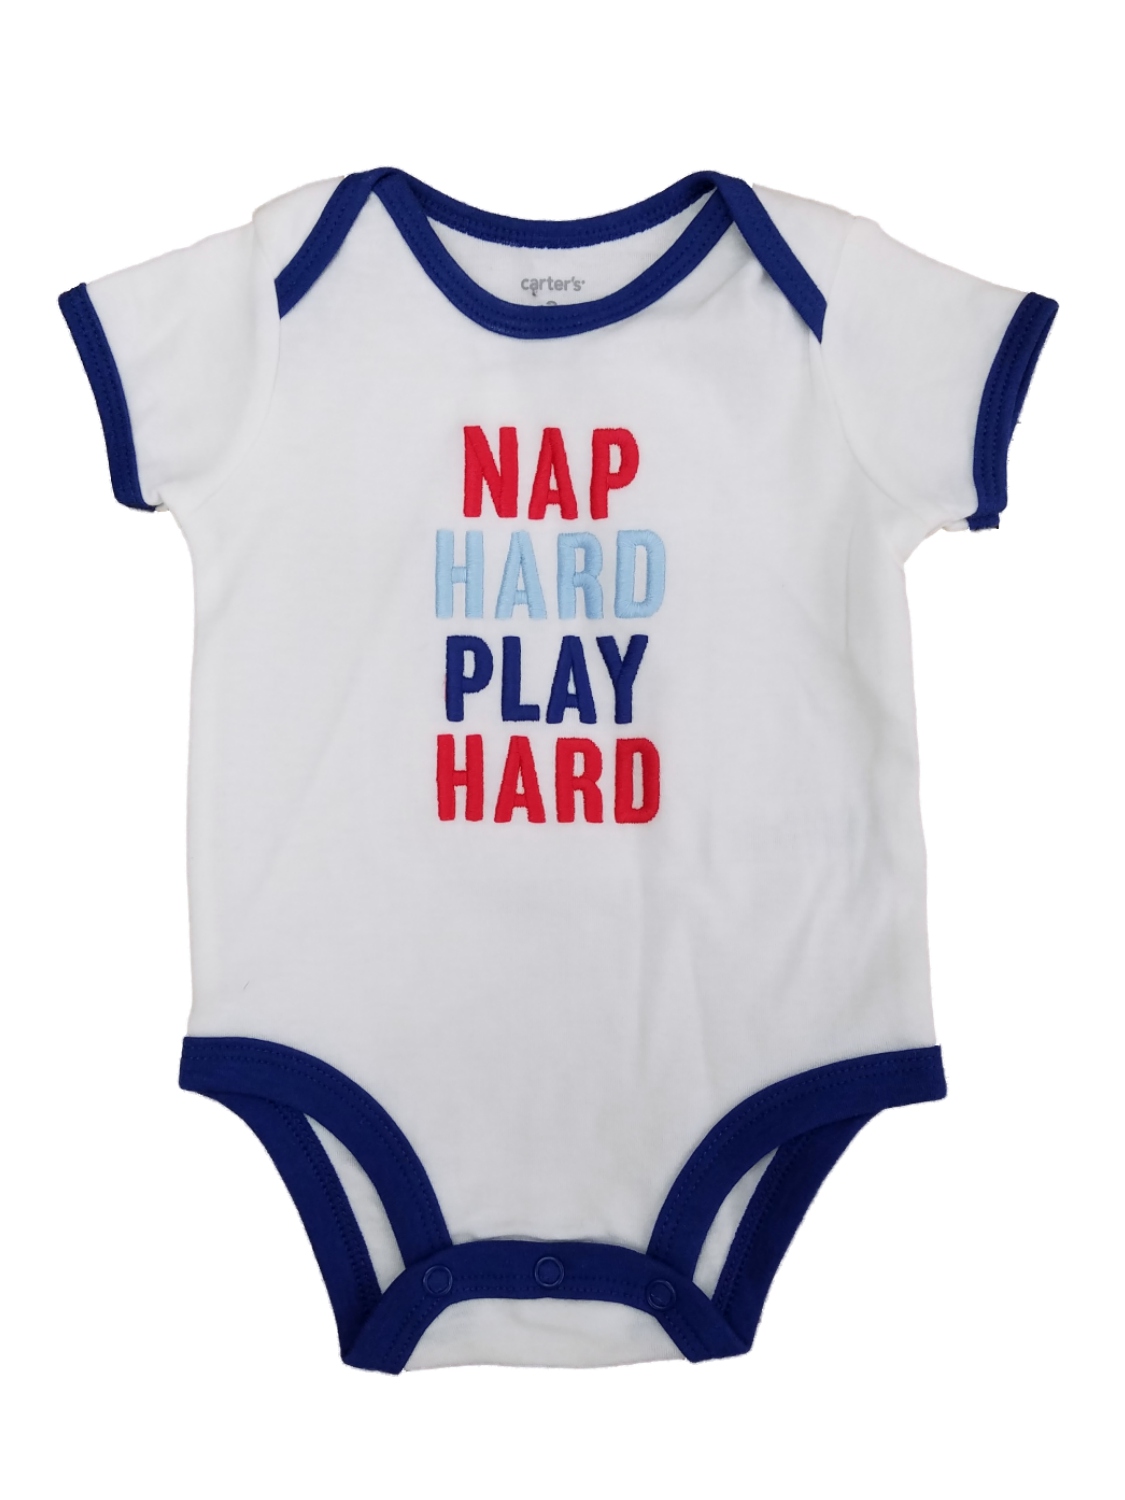 Carter's Carters Infant Boys White Nap Hard Play Hard Short Sleeve Baby Bodysuit